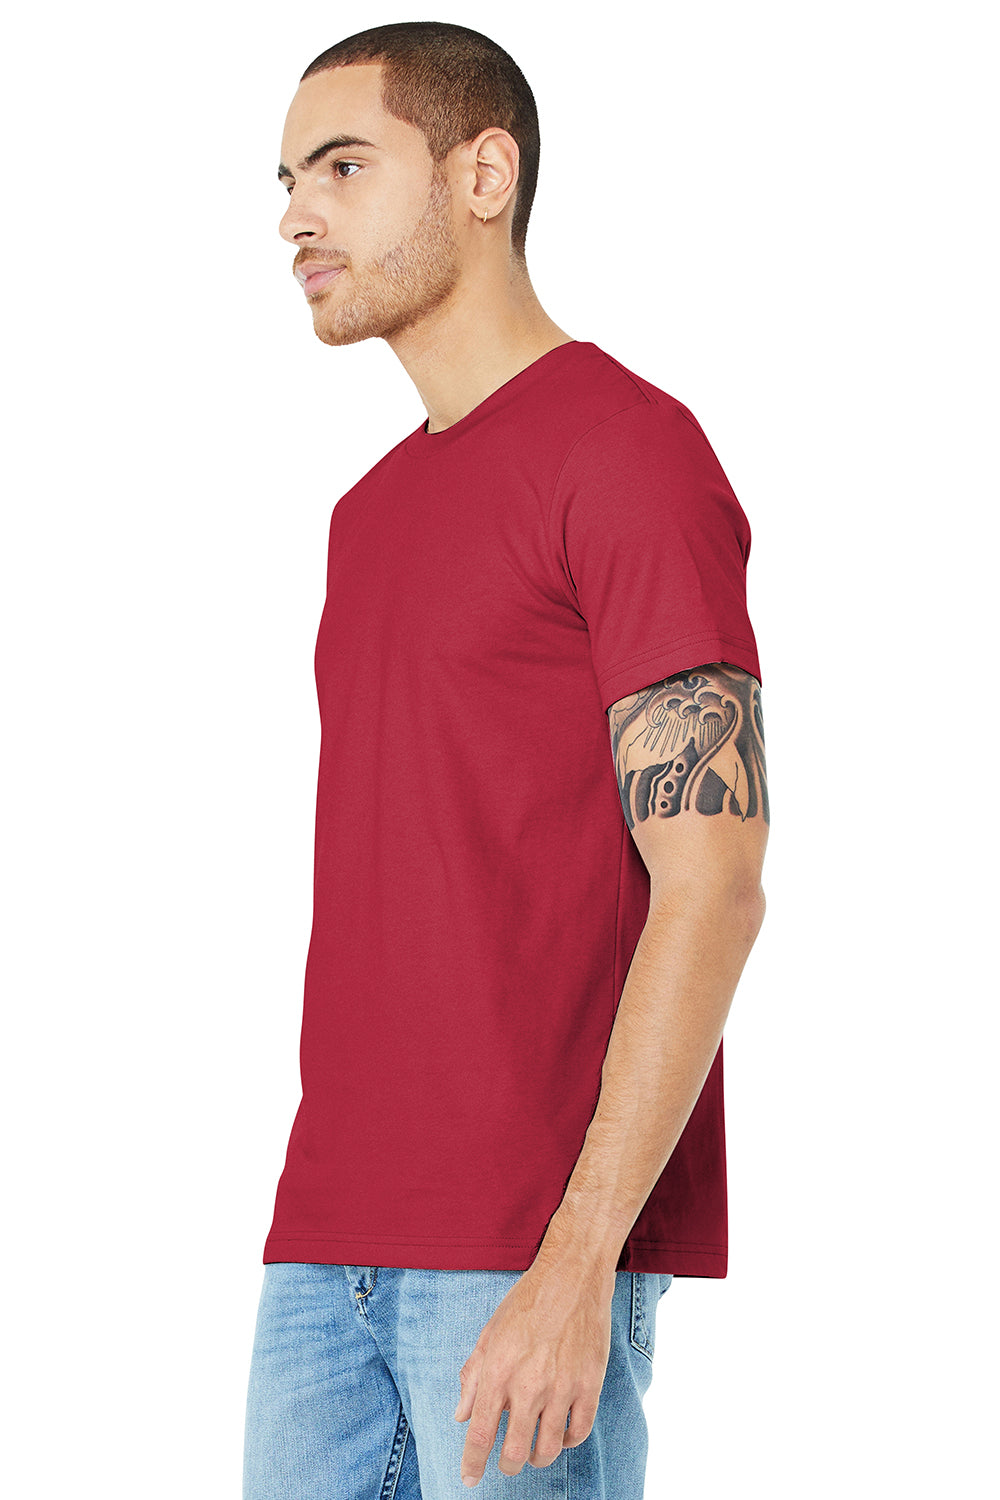 Bella + Canvas BC3001/3001C Mens Jersey Short Sleeve Crewneck T-Shirt Cardinal Red Model 3Q